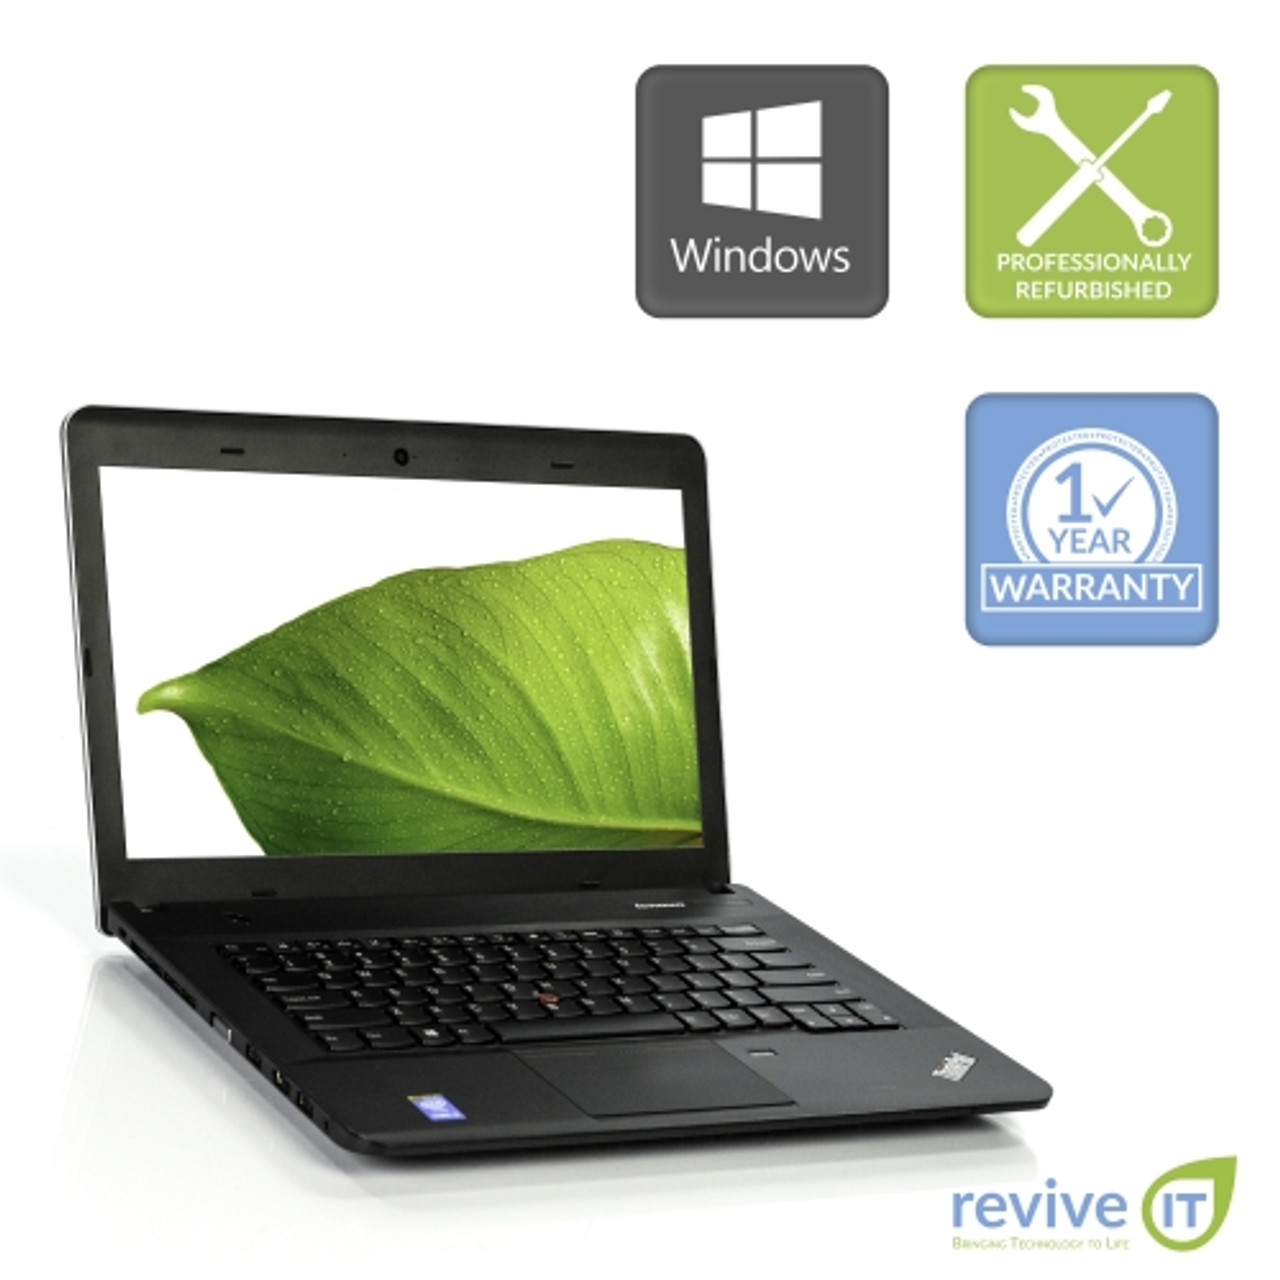 Lenovo ThinkPad E440 14 Laptop Core i3-4000M 2.4GHz 4GB 500GB Win 10 Pro